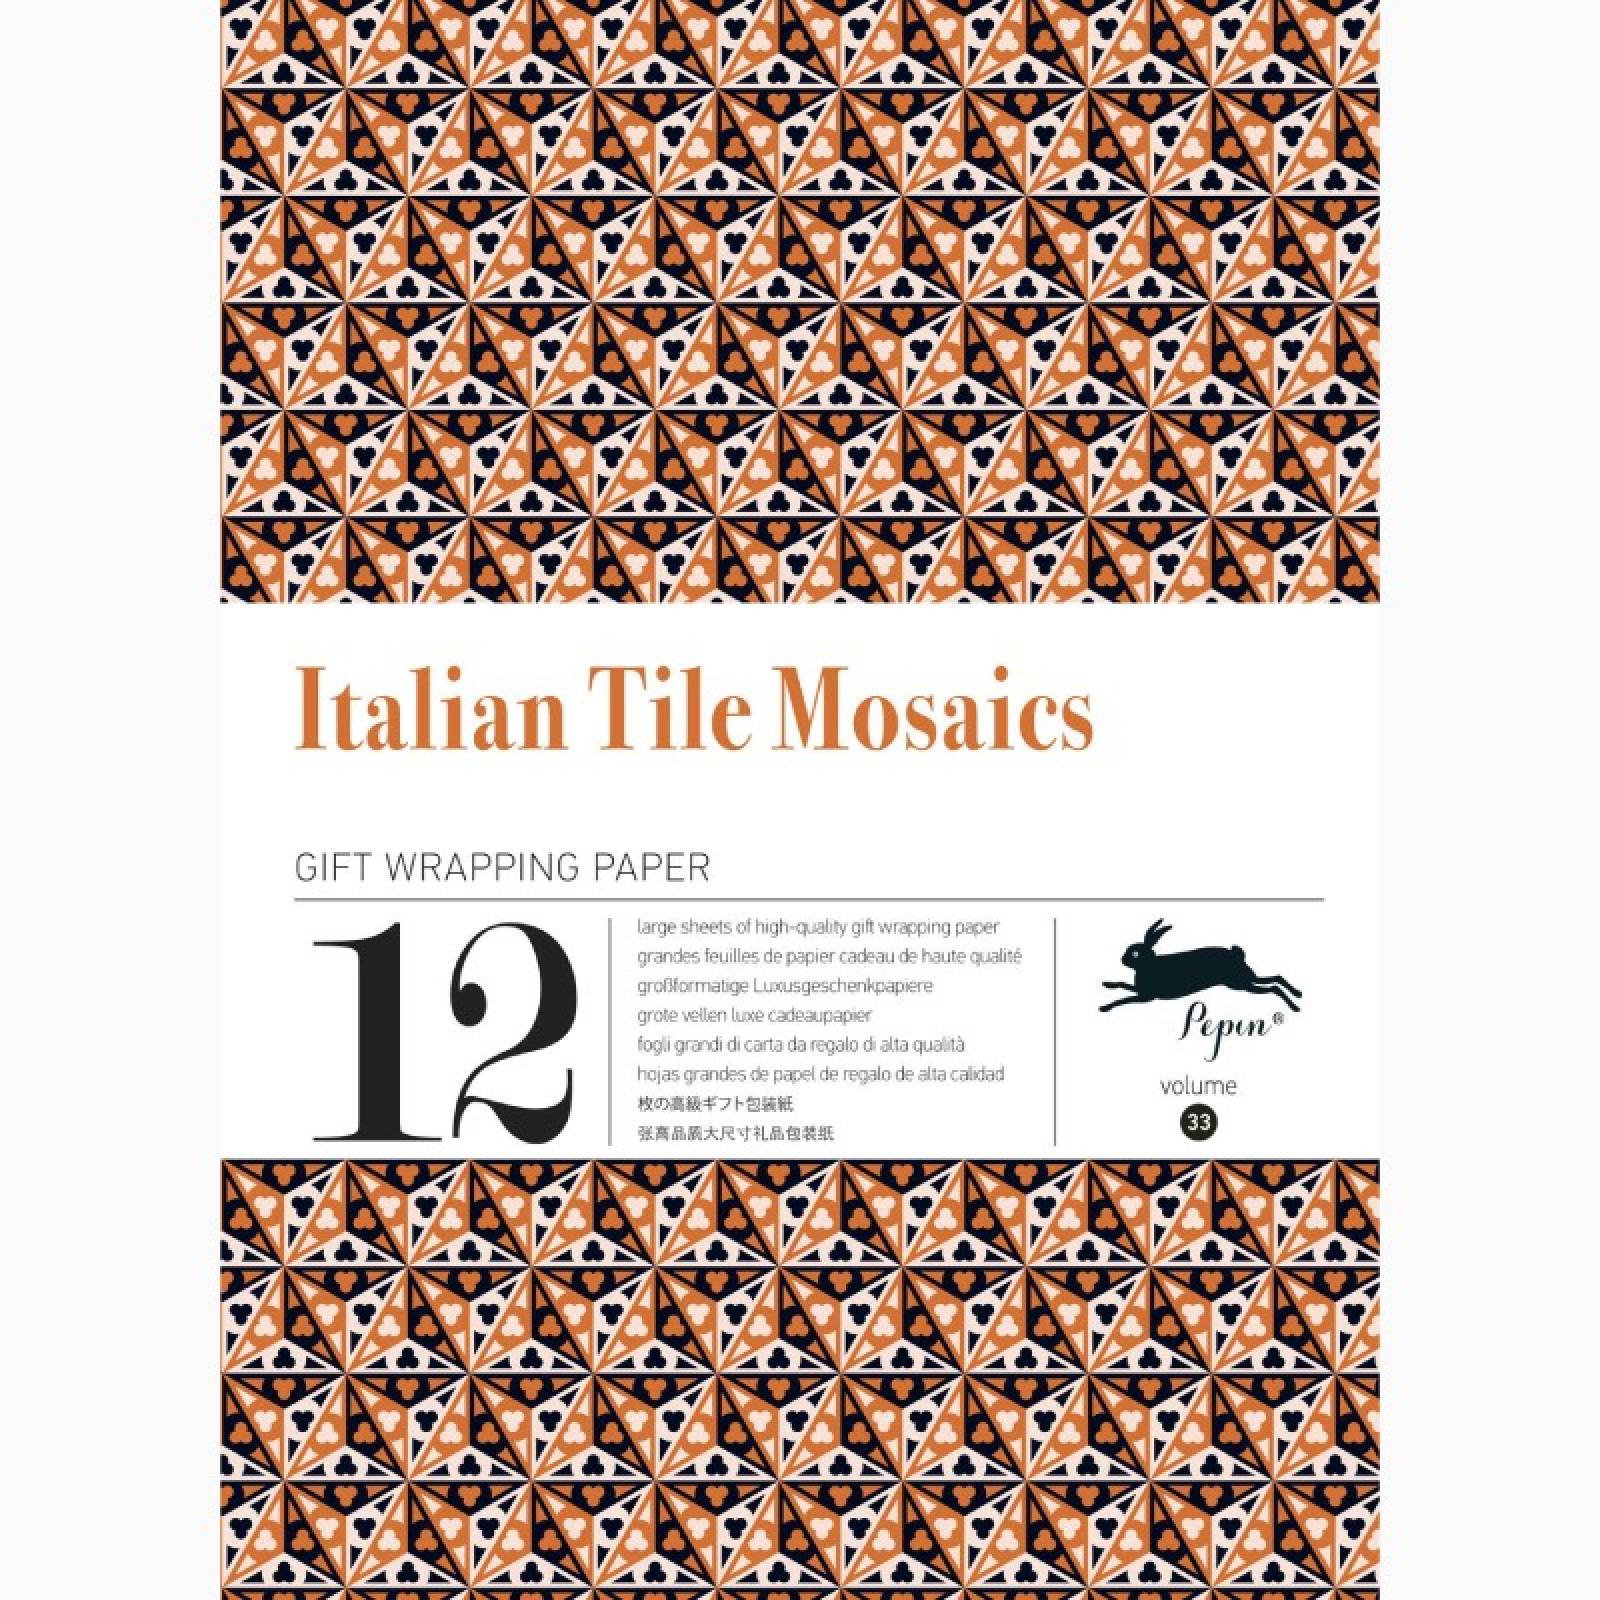 Italian Tile Mosaics - Pepin Book Of Gift Wrap